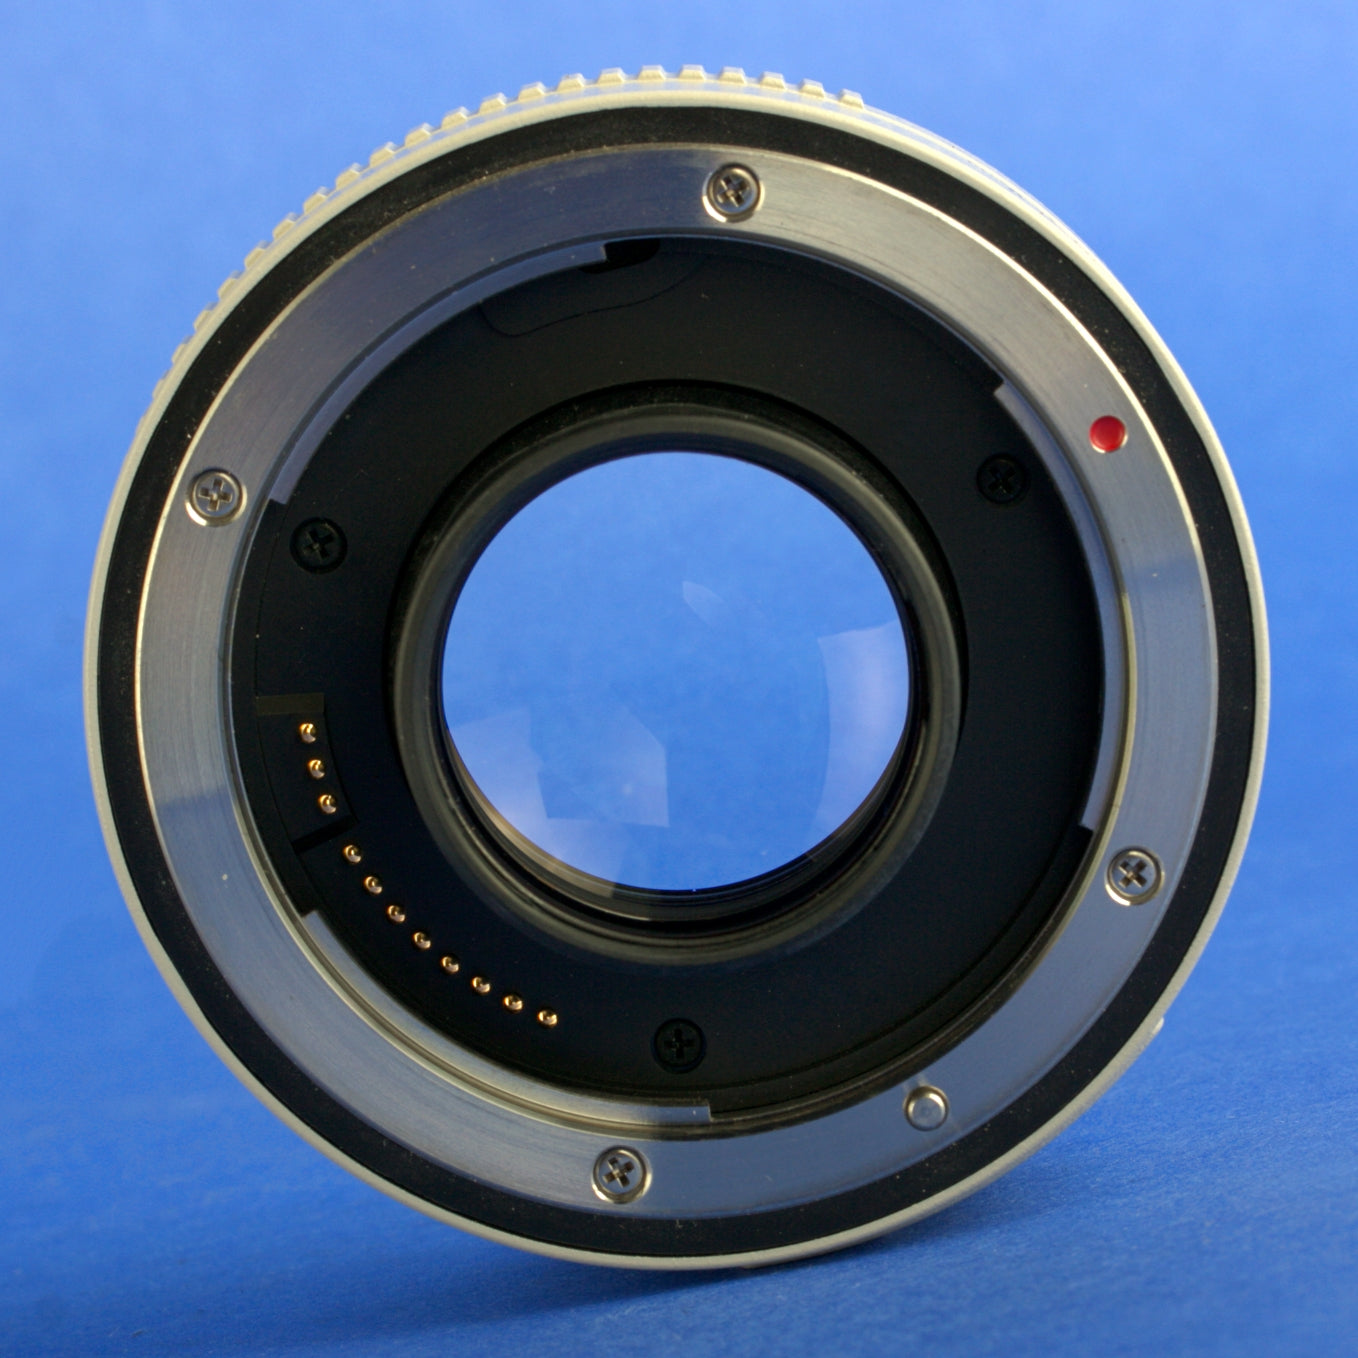 Canon EF 1.4x II Teleconverter Beautiful Condition